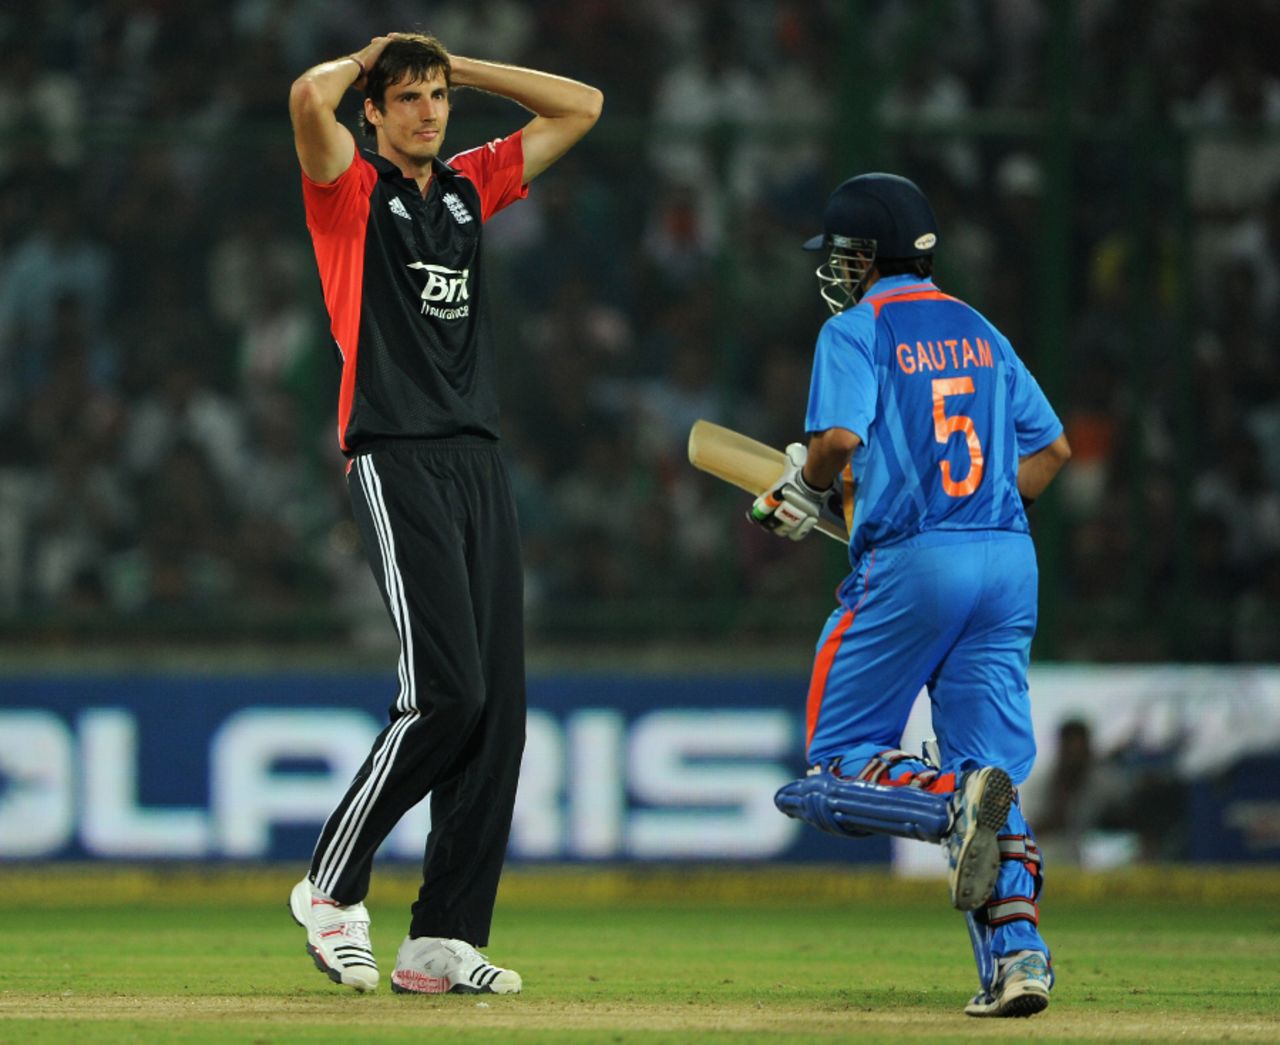 Steven Finn bowled a probing but luckless opening spell, India v England, 2nd ODI, Delhi, October 17 2011